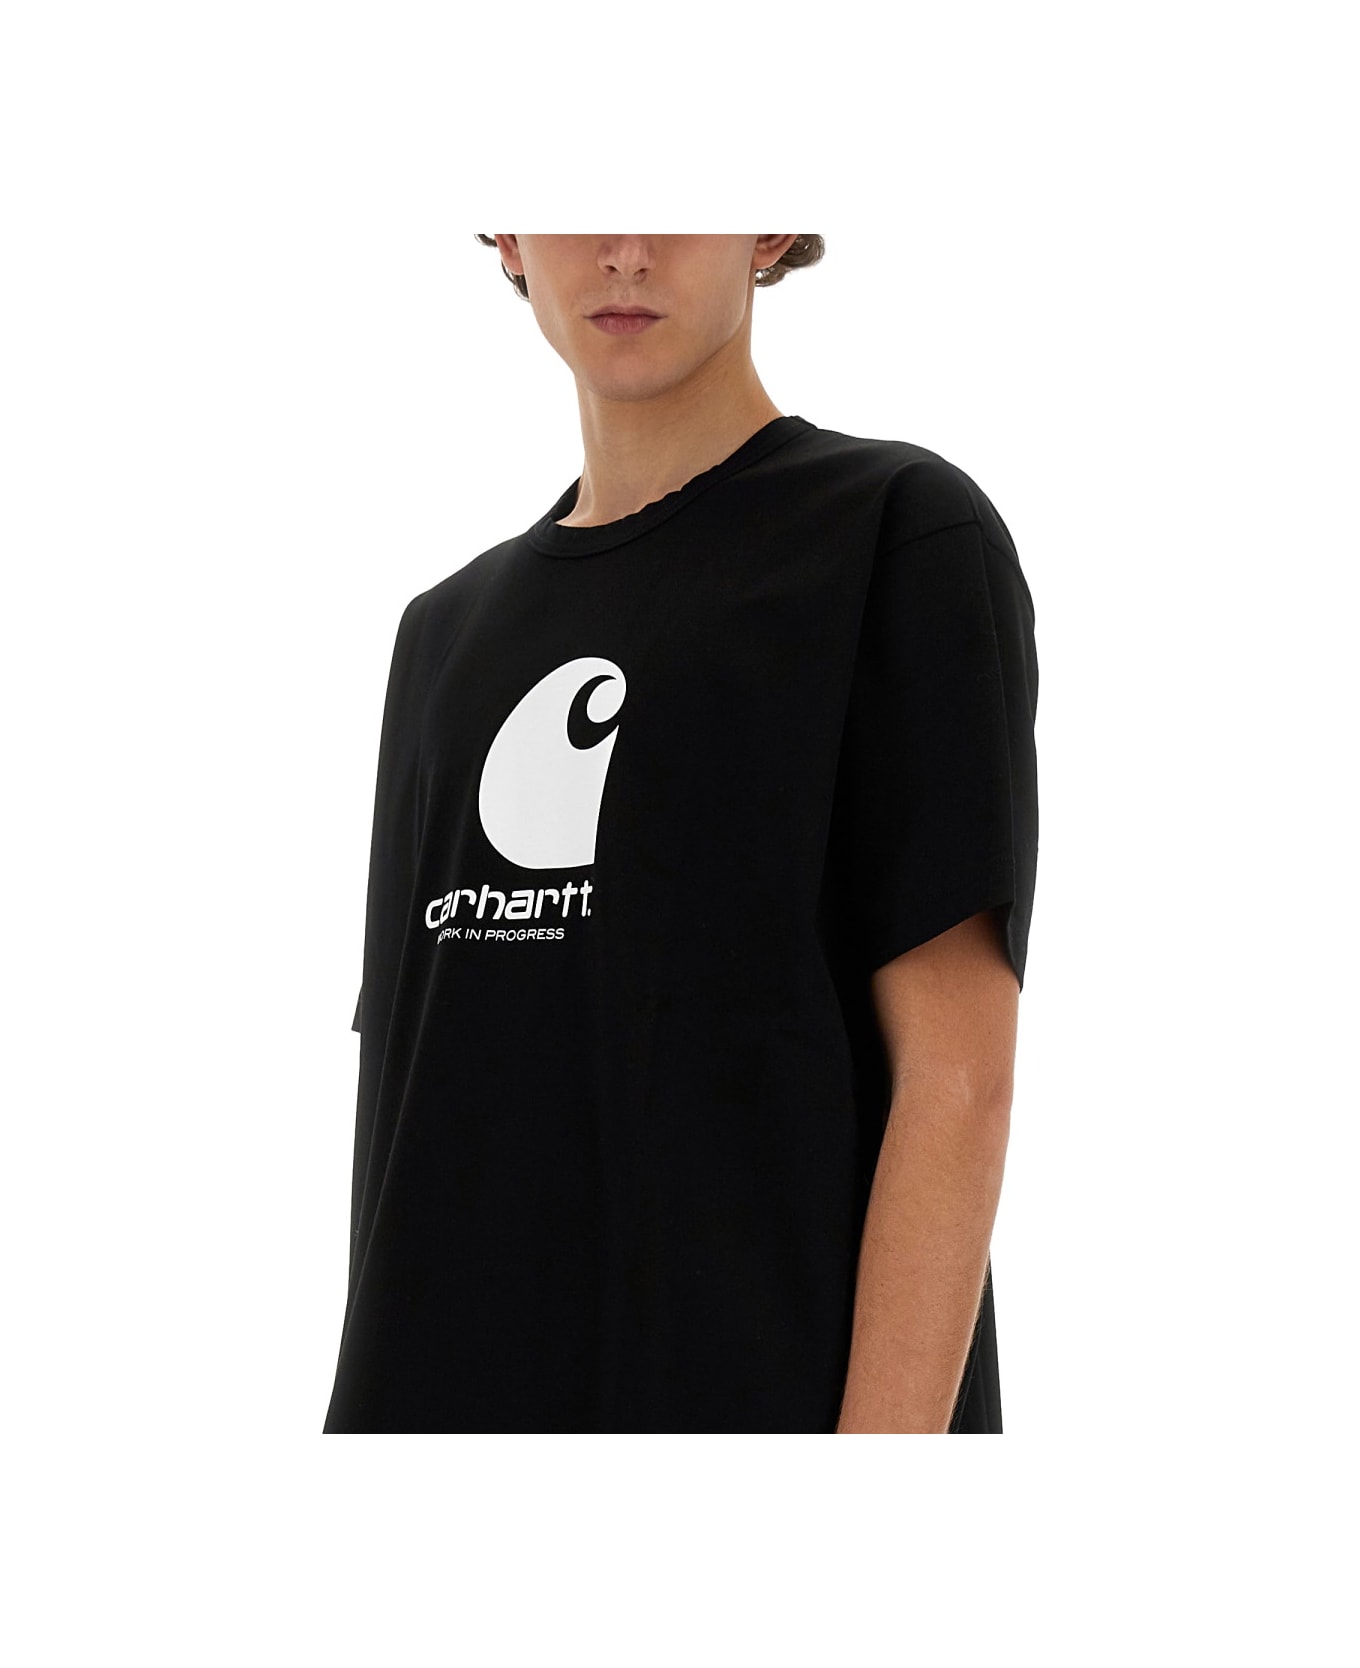 Junya Watanabe Man X Carhartt T-shirt - BLACK